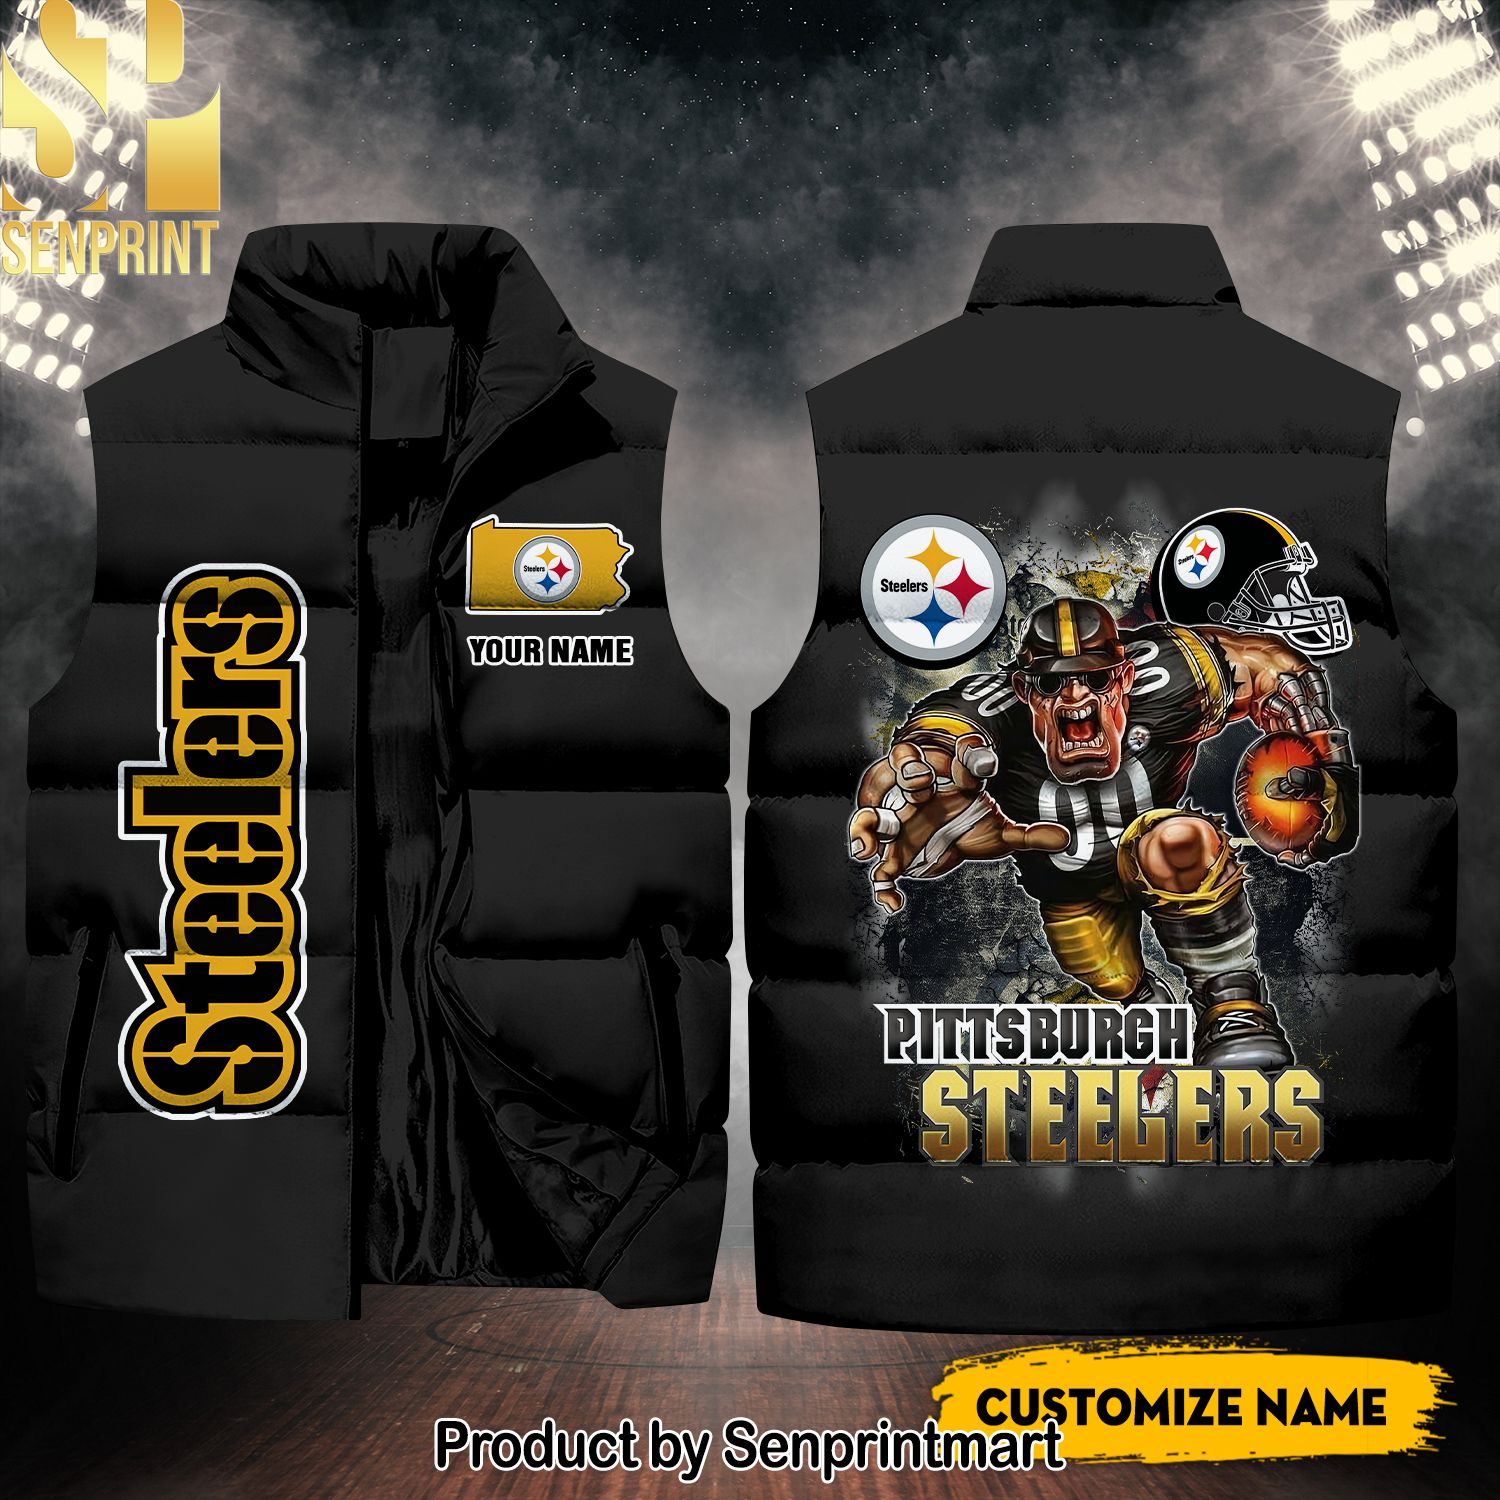 National Football League Pittsburgh Steelers Personalized Name High Fashion Sleeveless Jacket